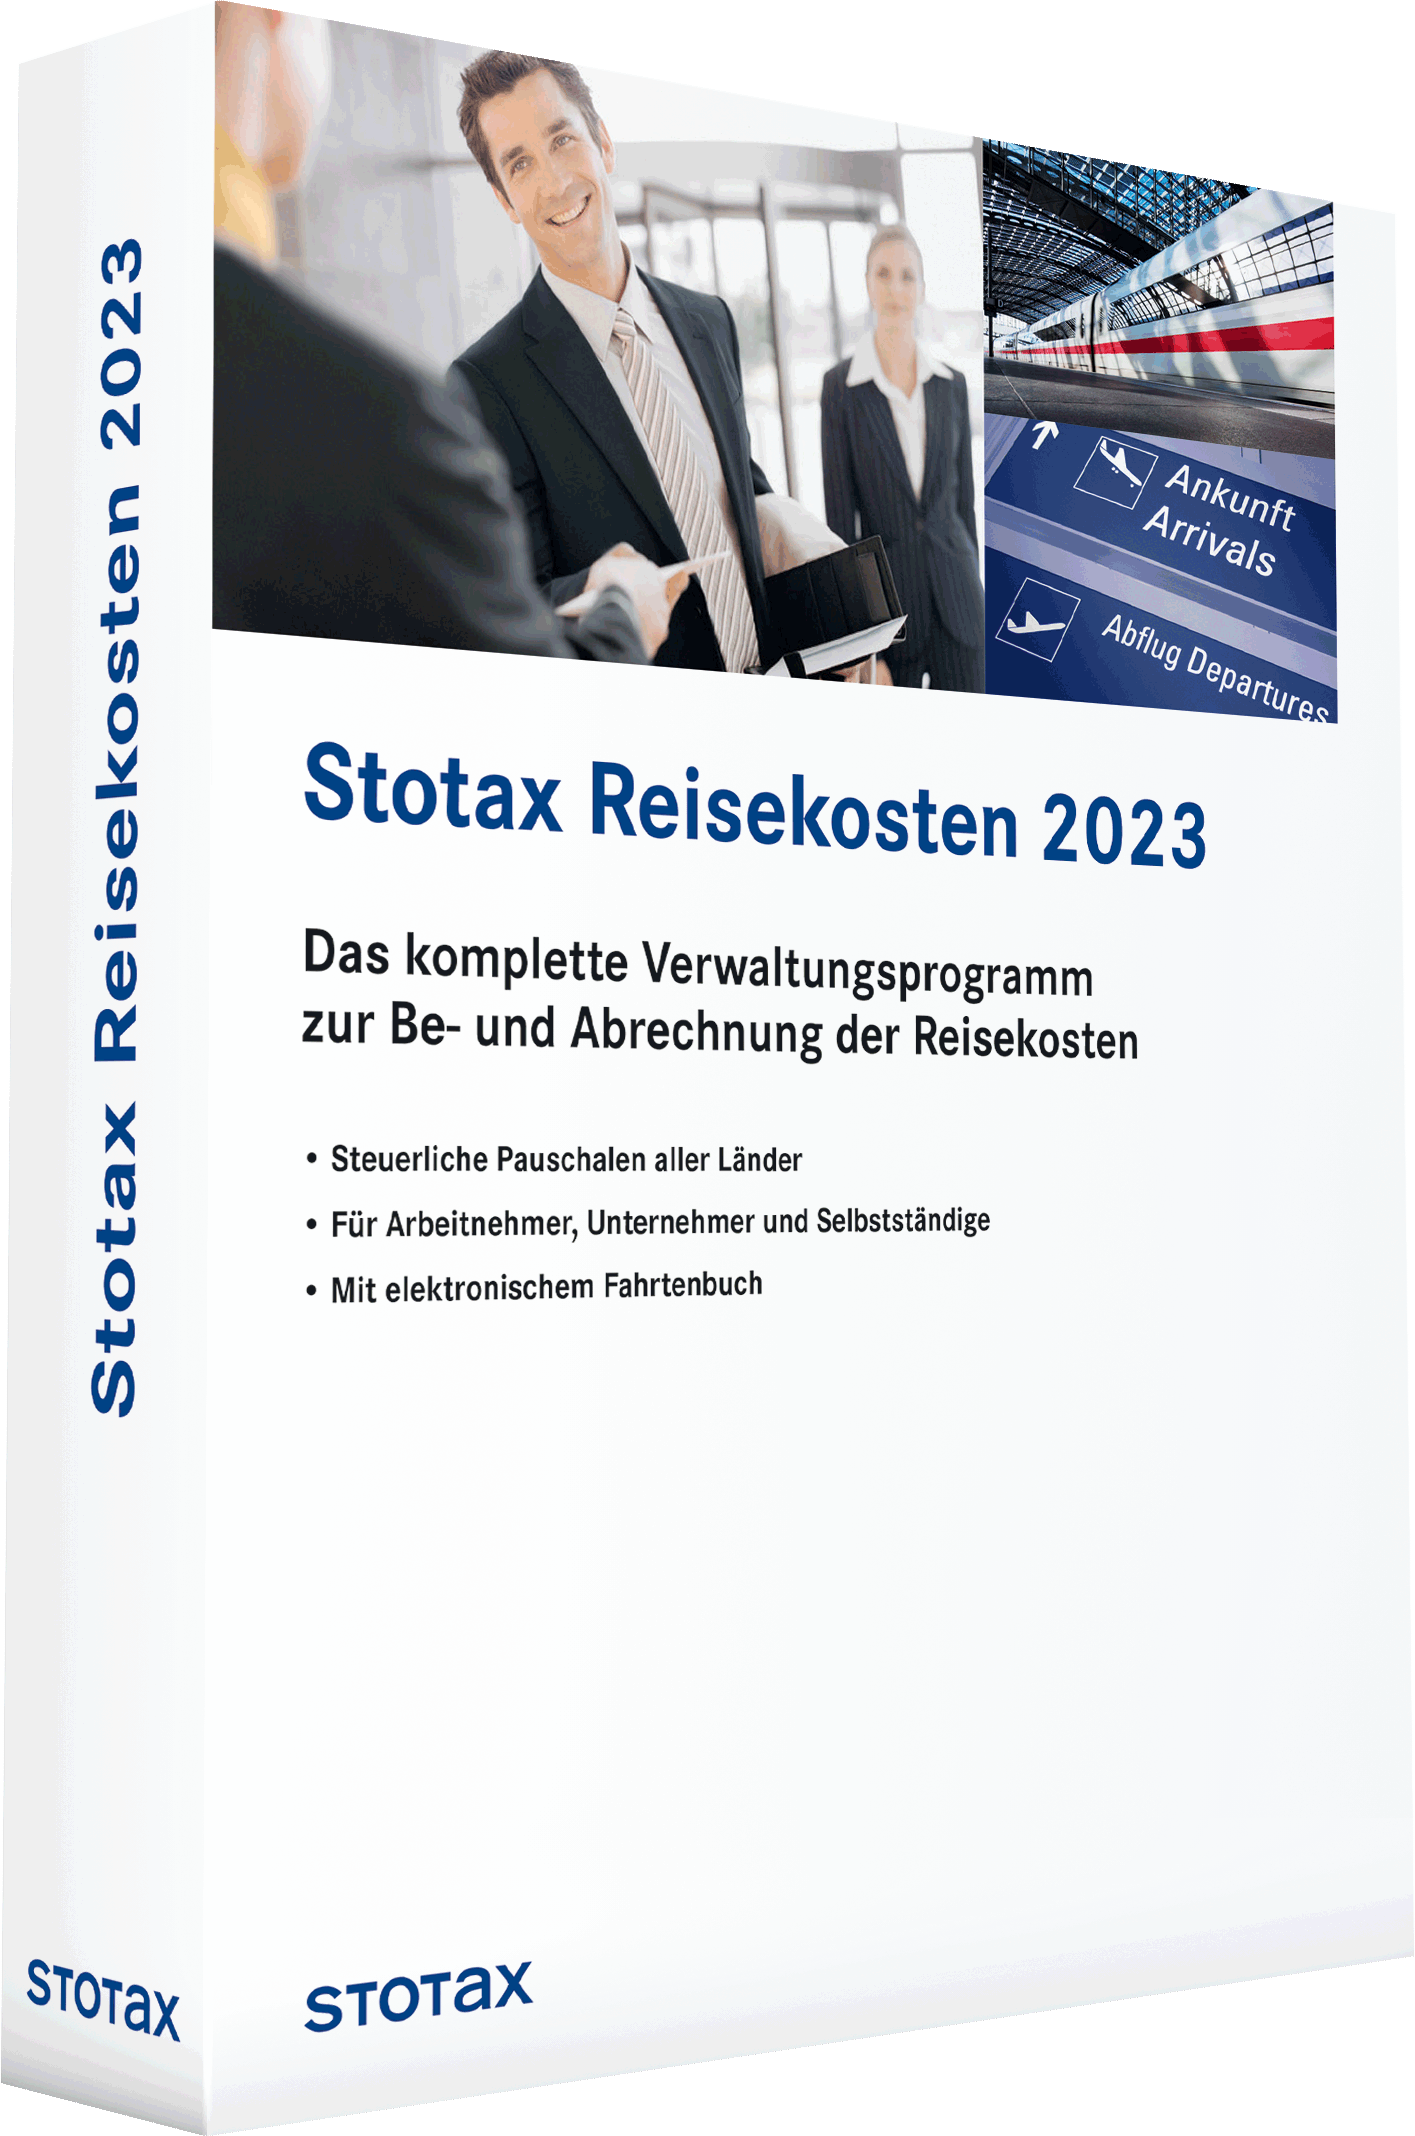 Stotax Reisekosten 2023